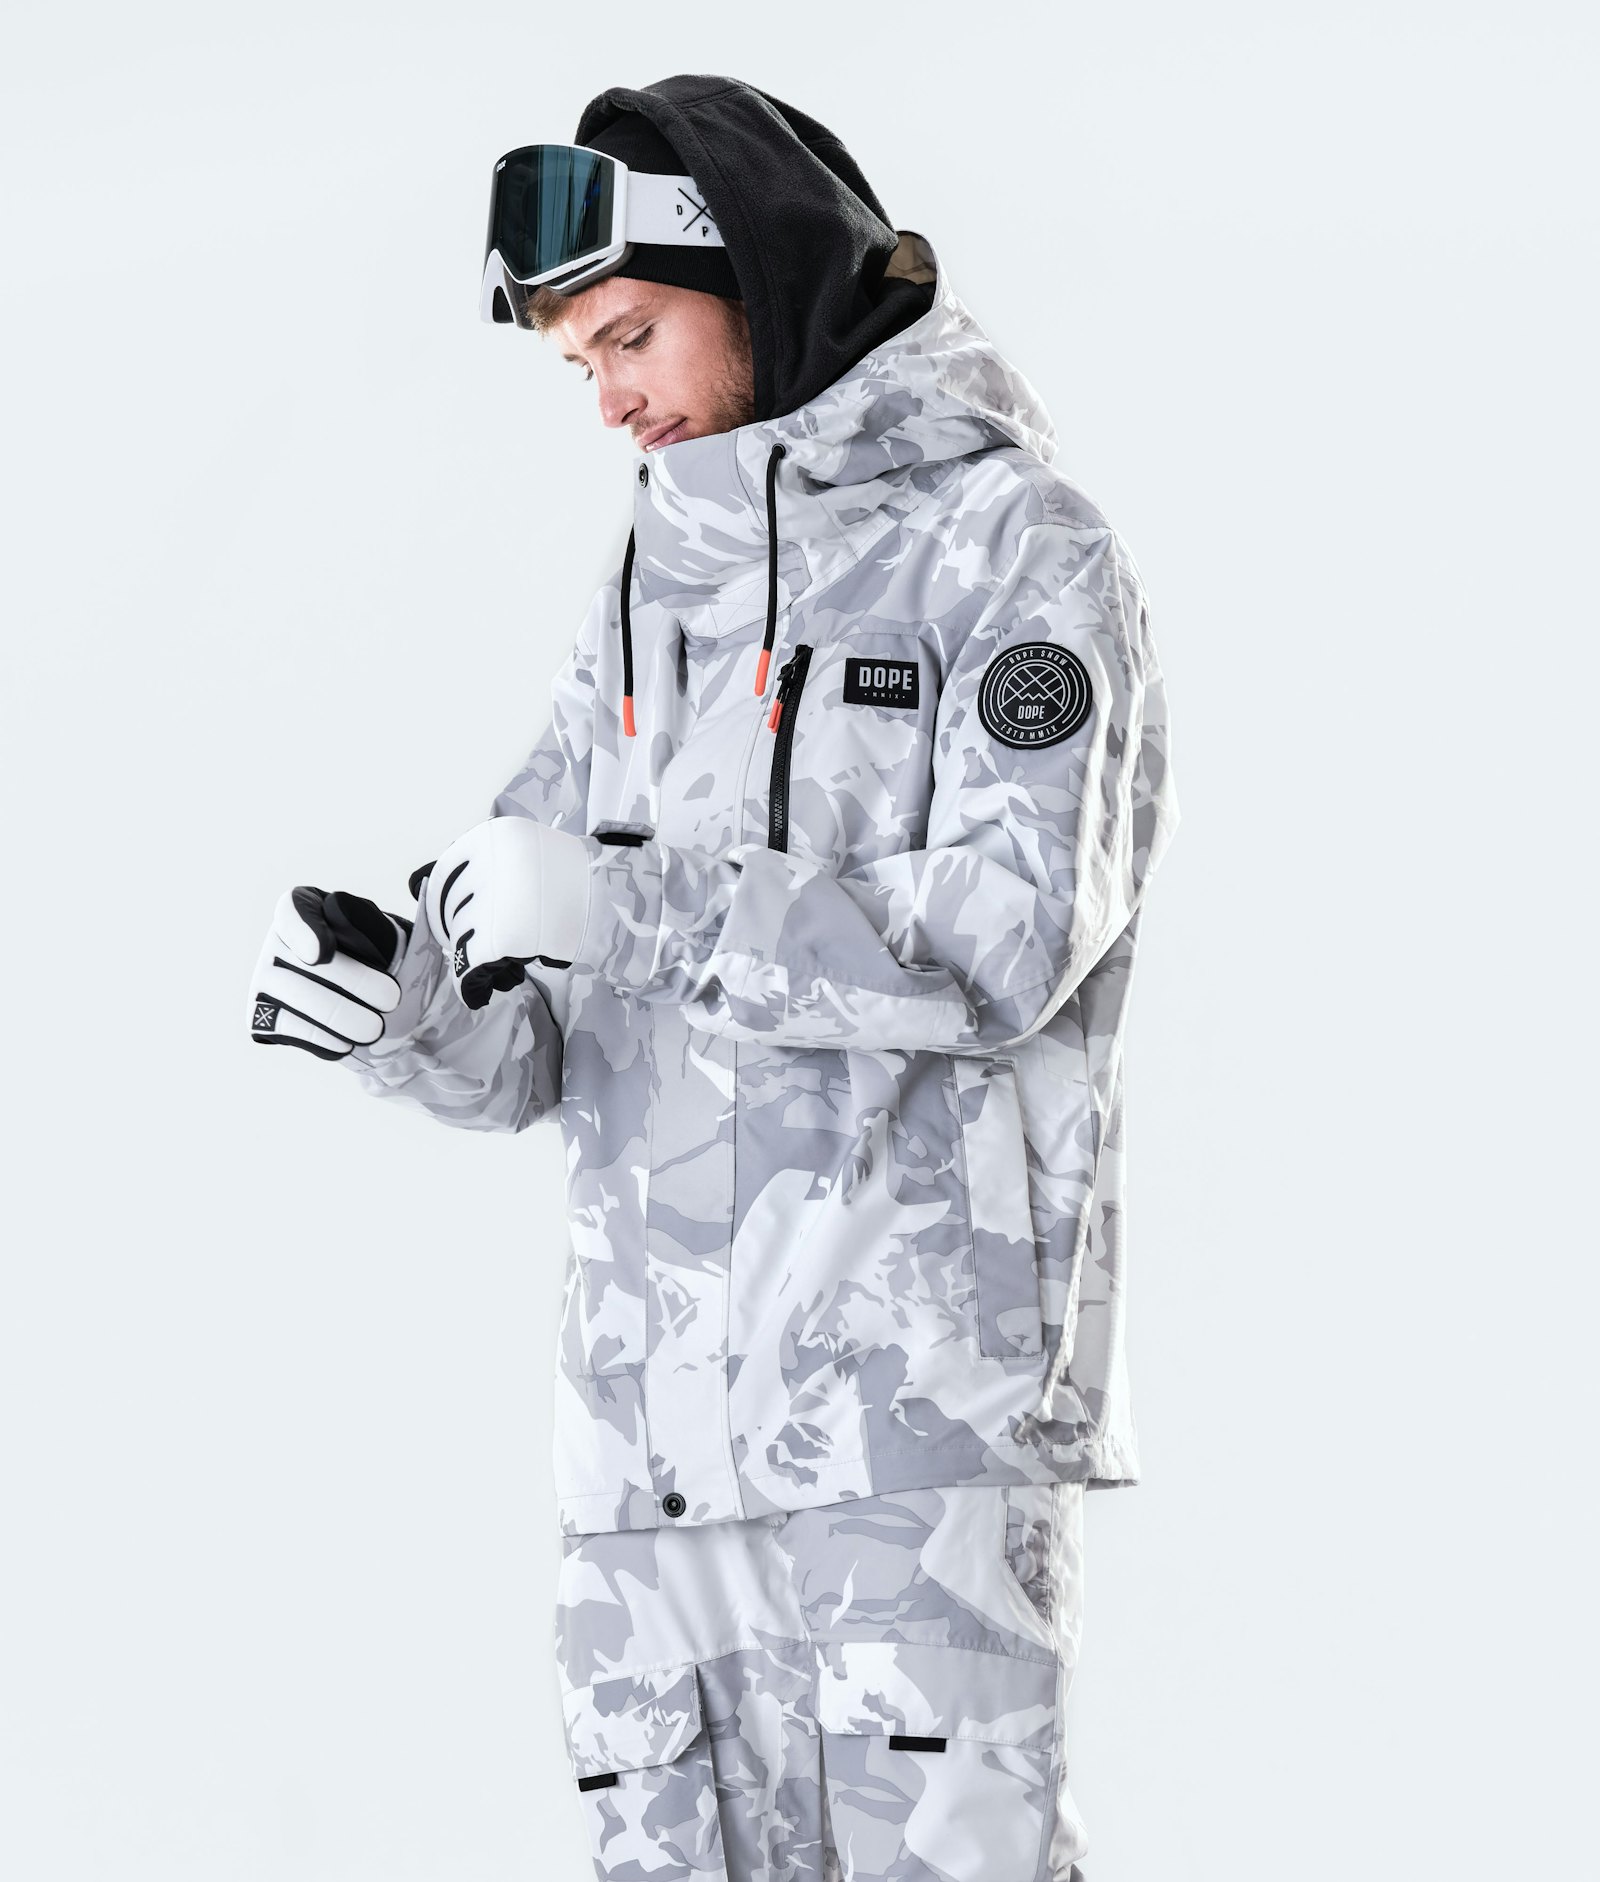 Dope Blizzard Full Zip 2020 Veste Snowboard Homme Tucks Camo